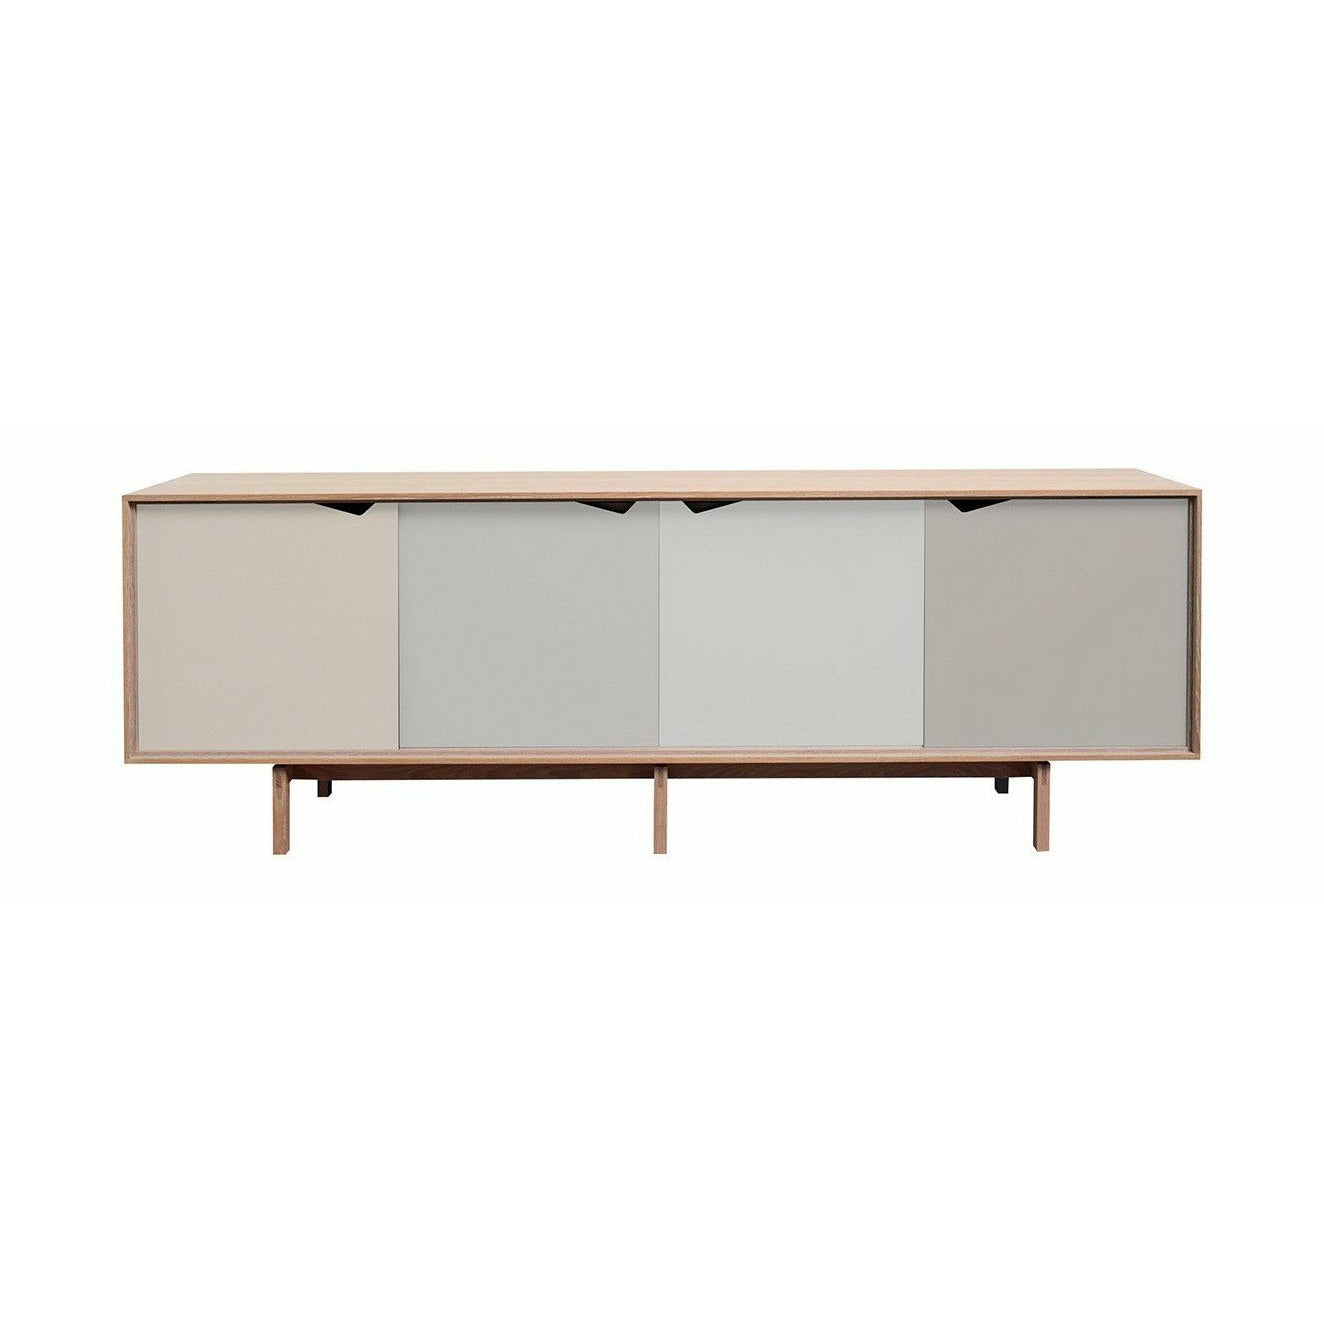 Andersen Furniture S1 Sideboard Soaped Oak, Multicolored Drawers, 200cm